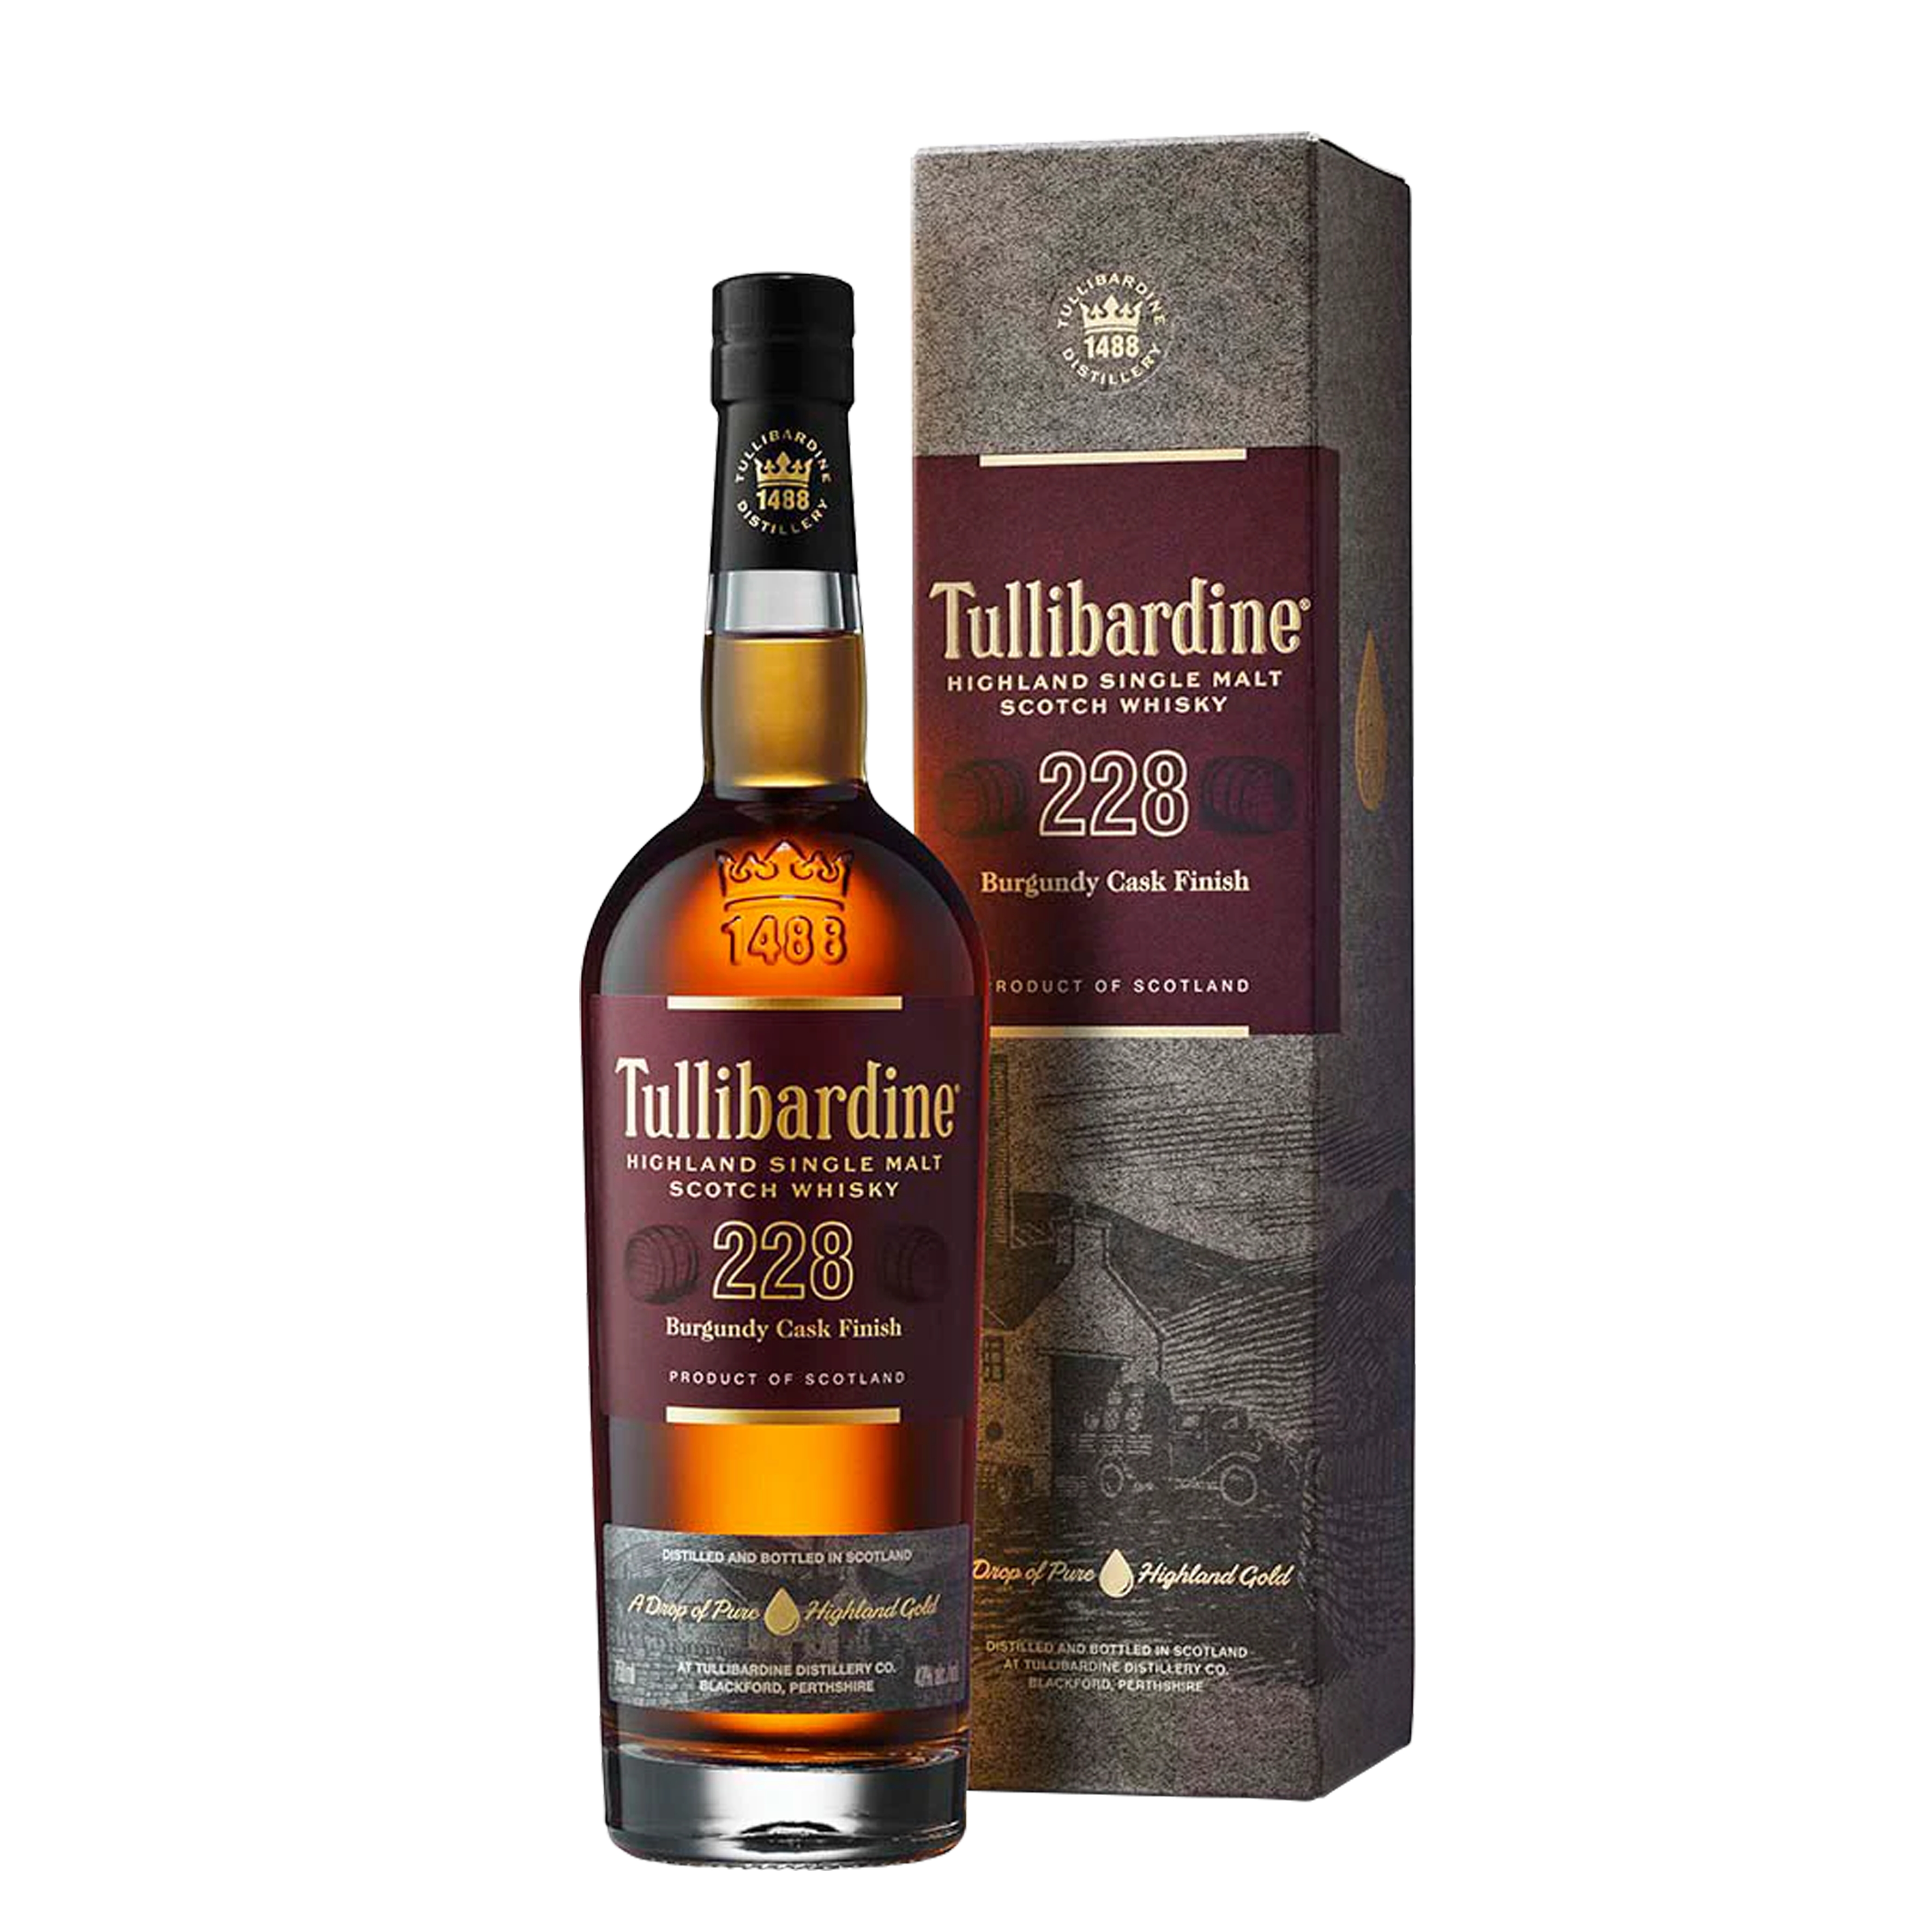 Tullibardine, 228 Burgundy Cask Whisky